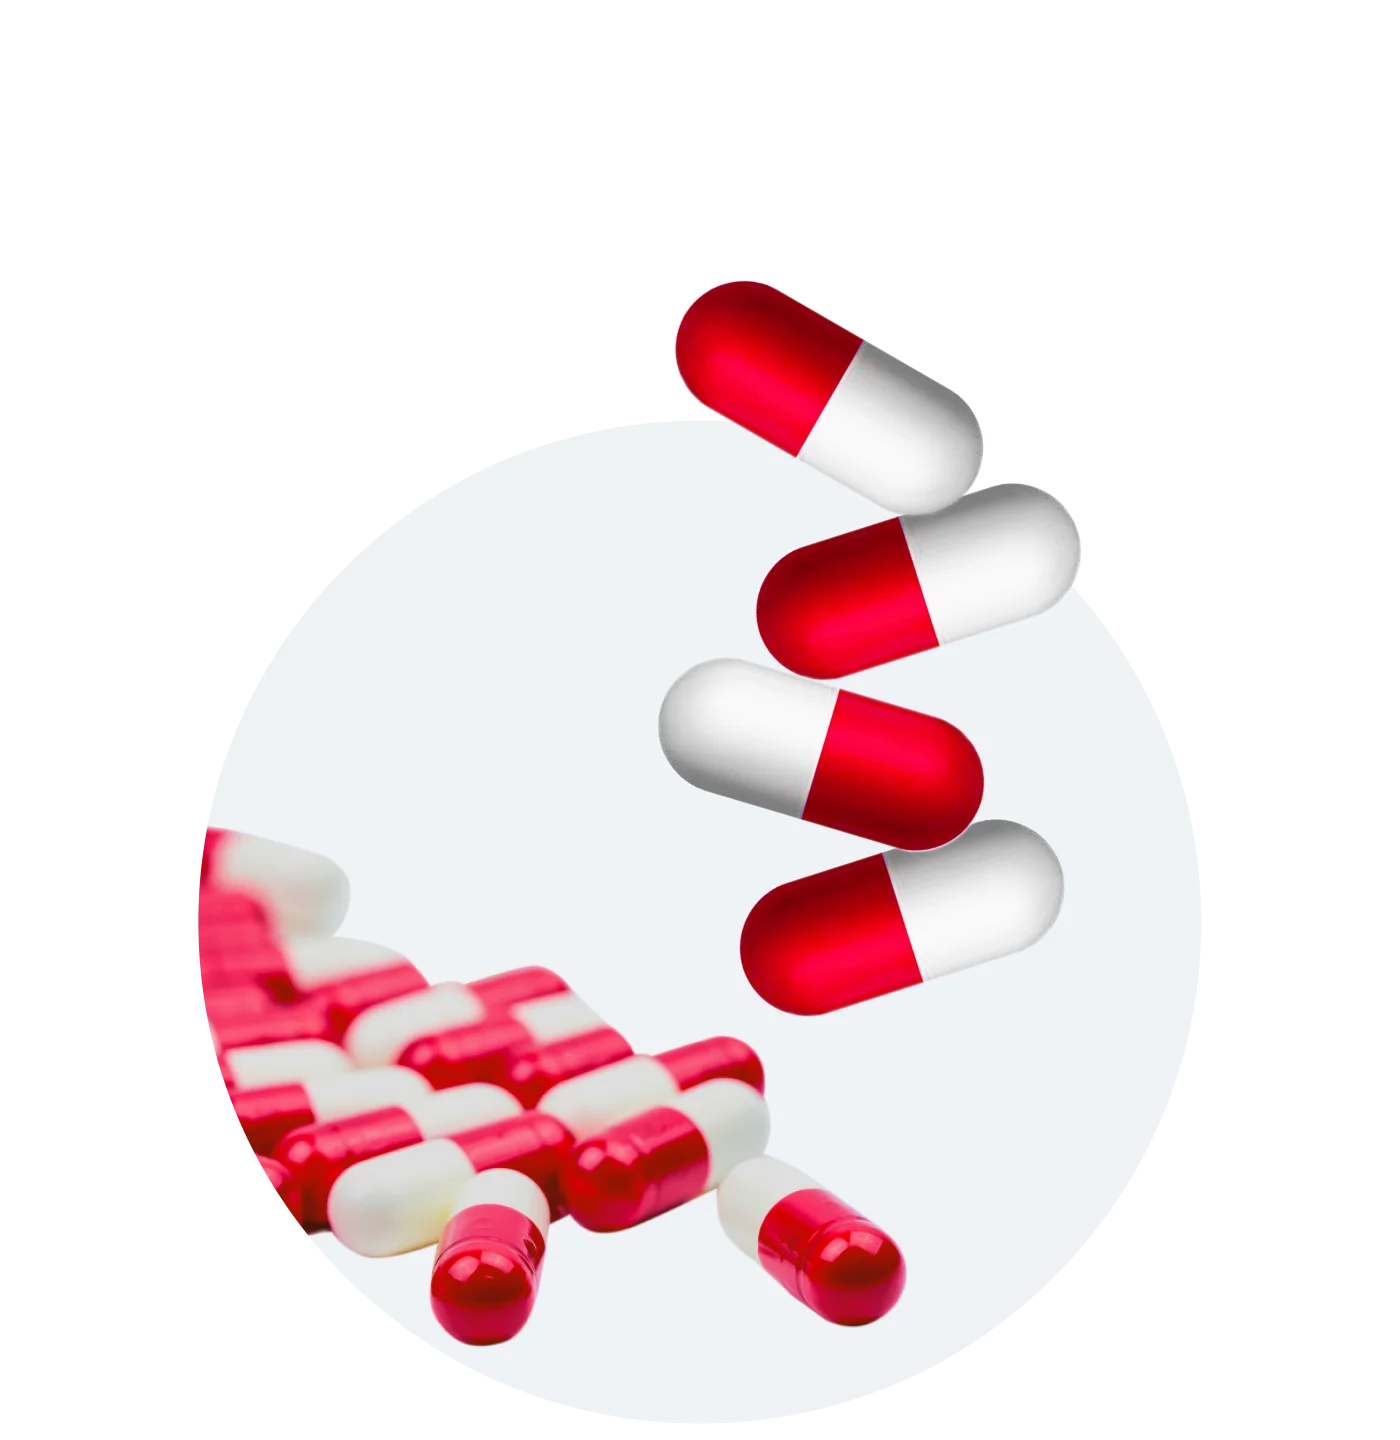 Pharmaceutical & Nutraceutical